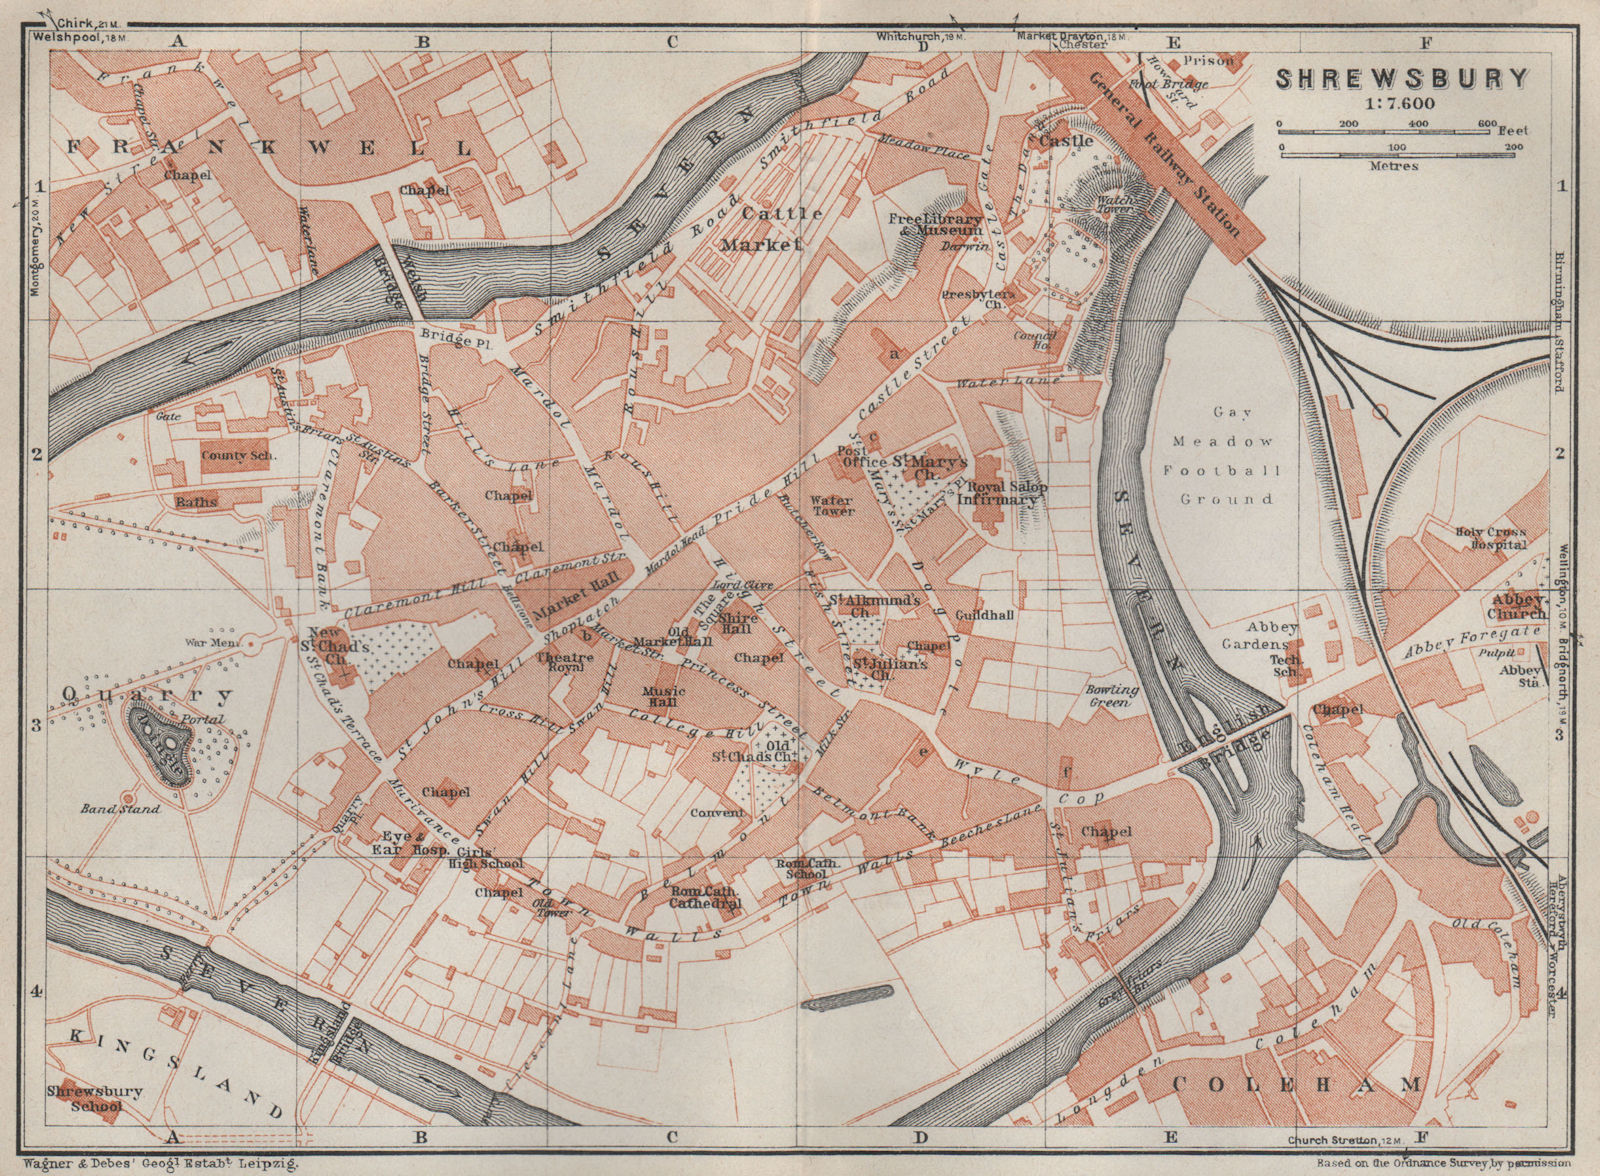 SHREWSBURY town city plan. Frankwell Coleham Kingsland. Shropshire 1927 map